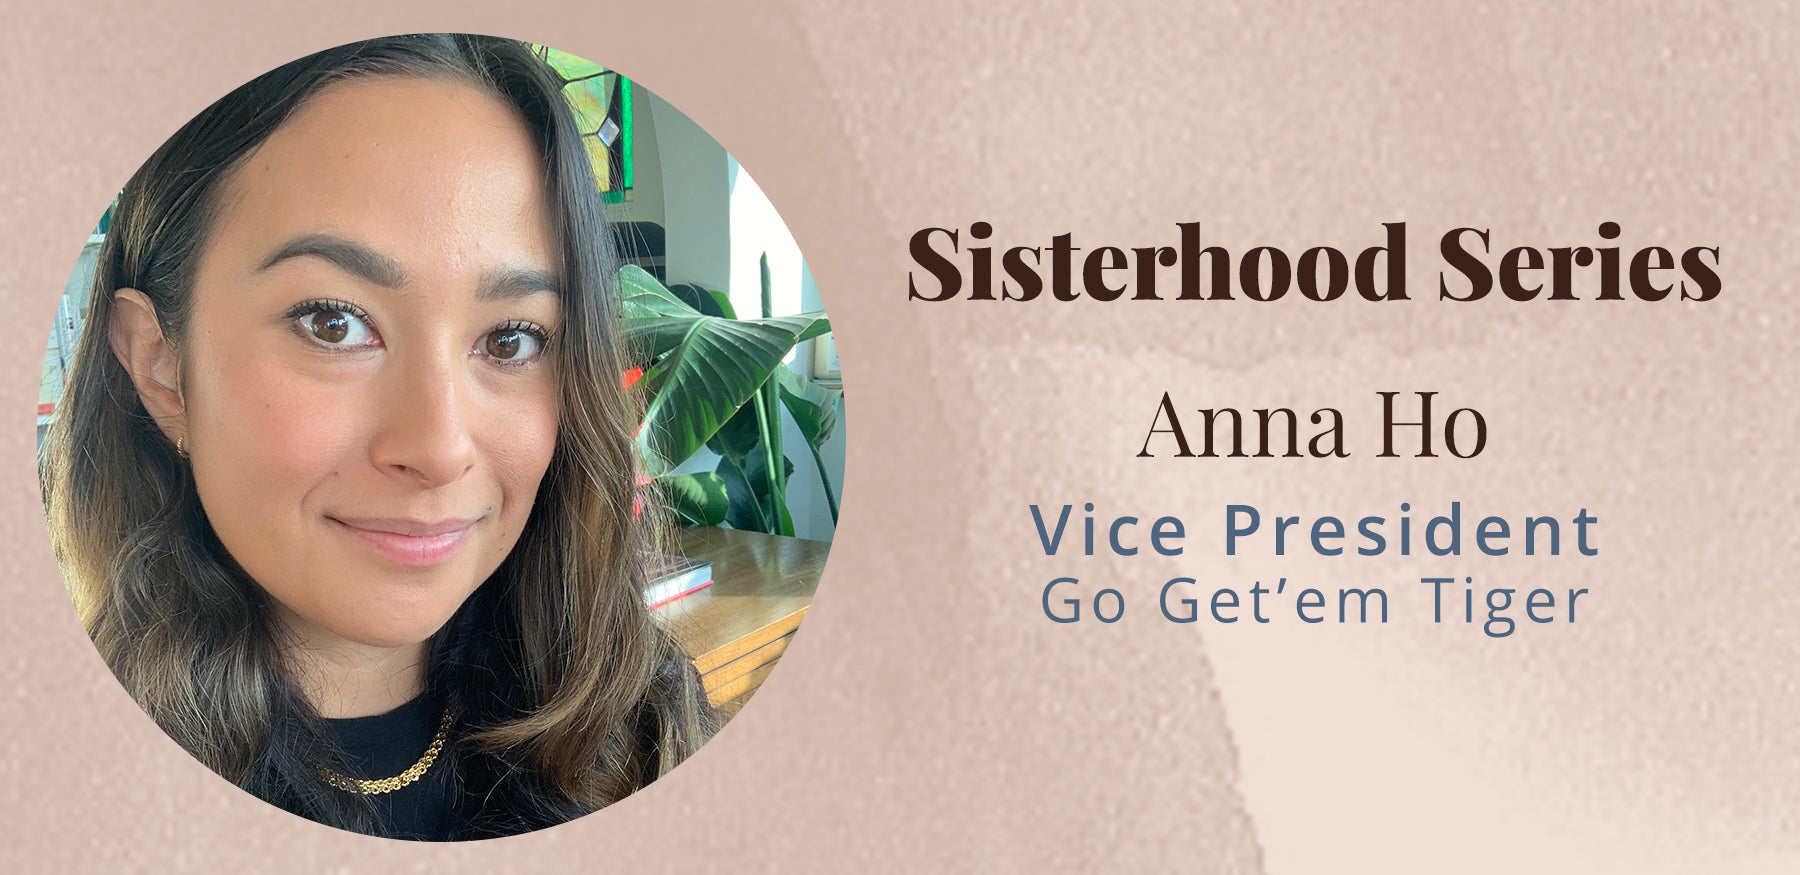 Sisterhood Series with Anna Ho